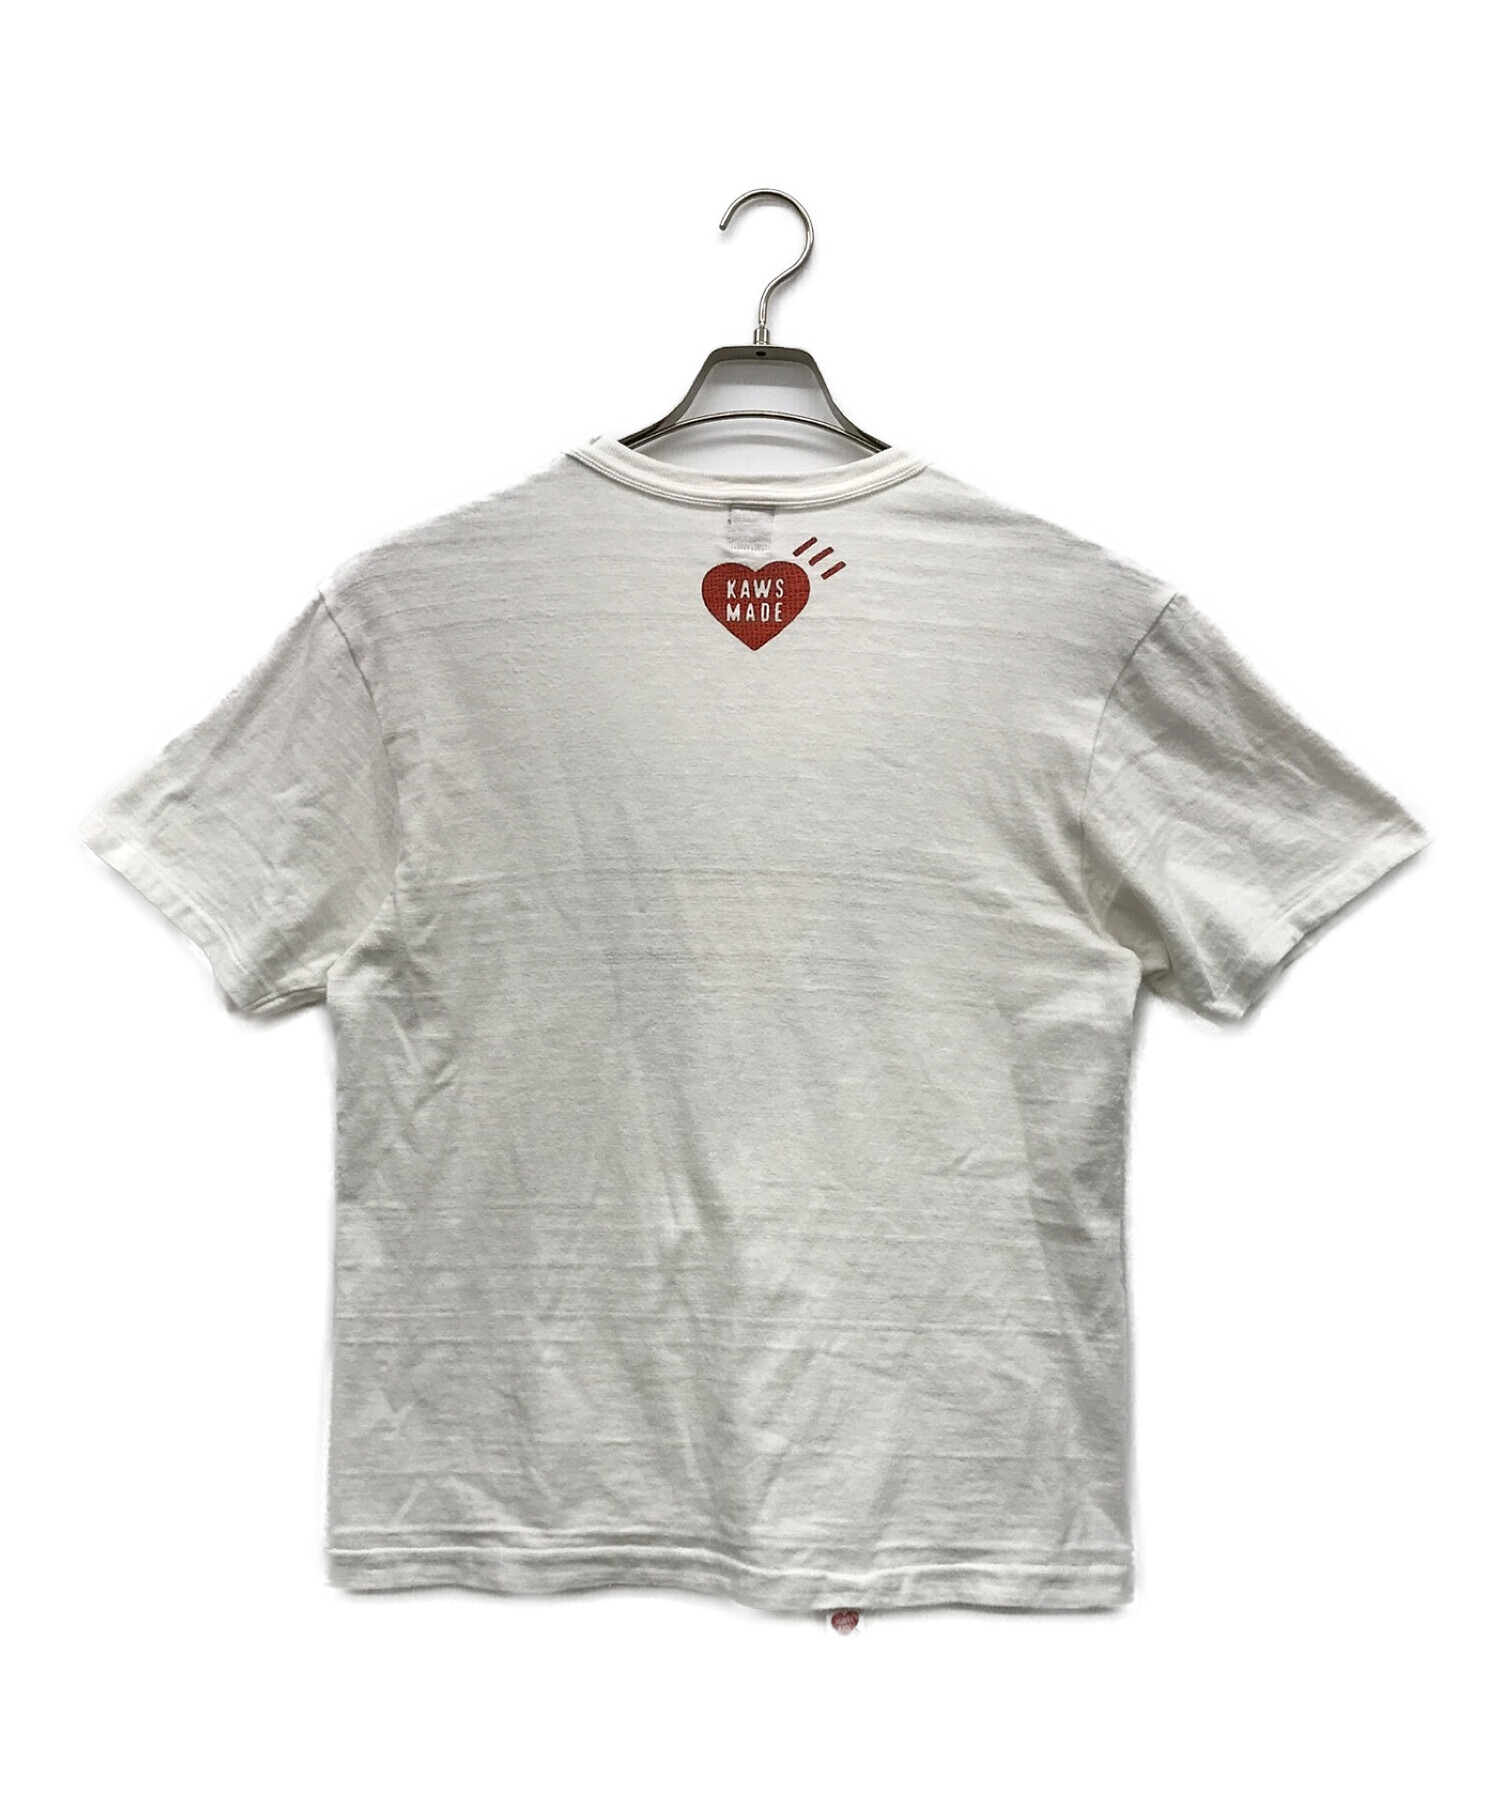 Tシャツ/カットソー(半袖/袖なし)HUMAN MADE KAWS Made Graphic T-Shirt M